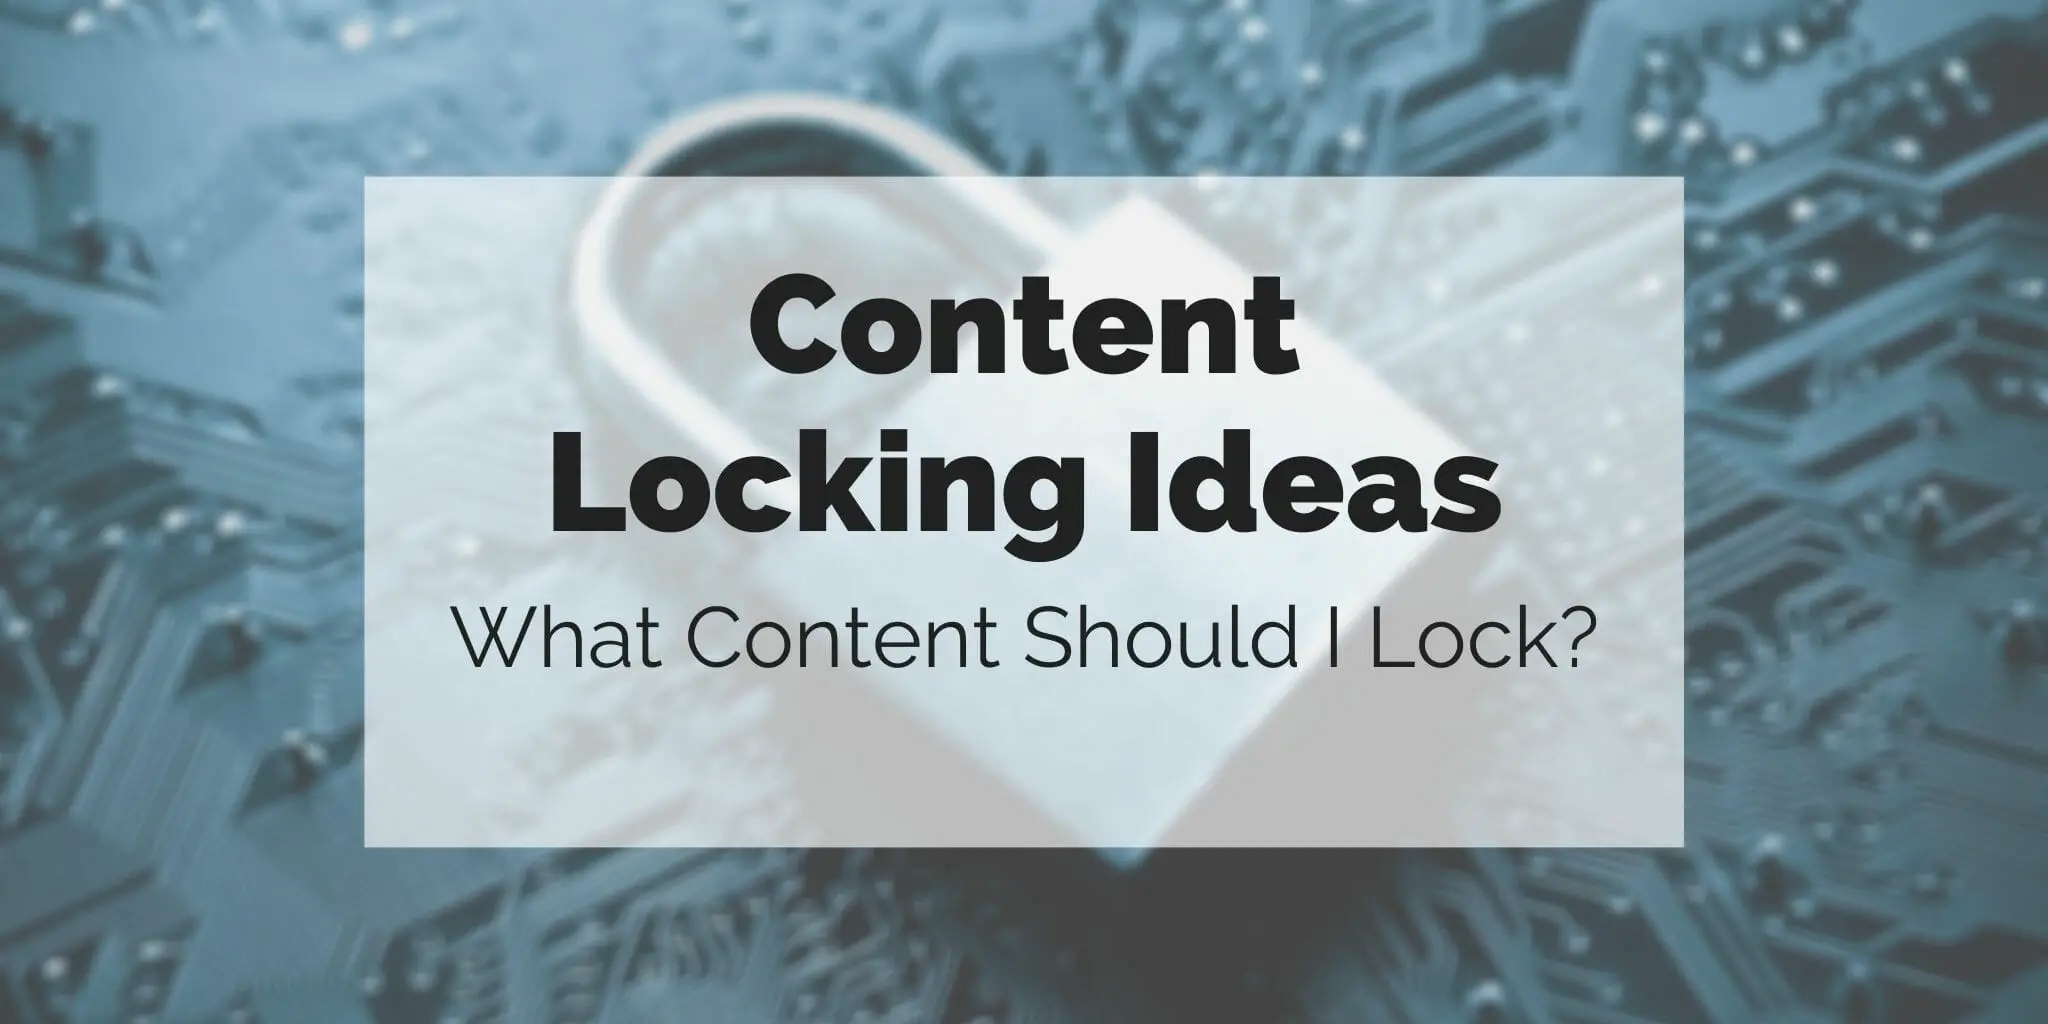 Content locking ideas: Which content is worth locking?